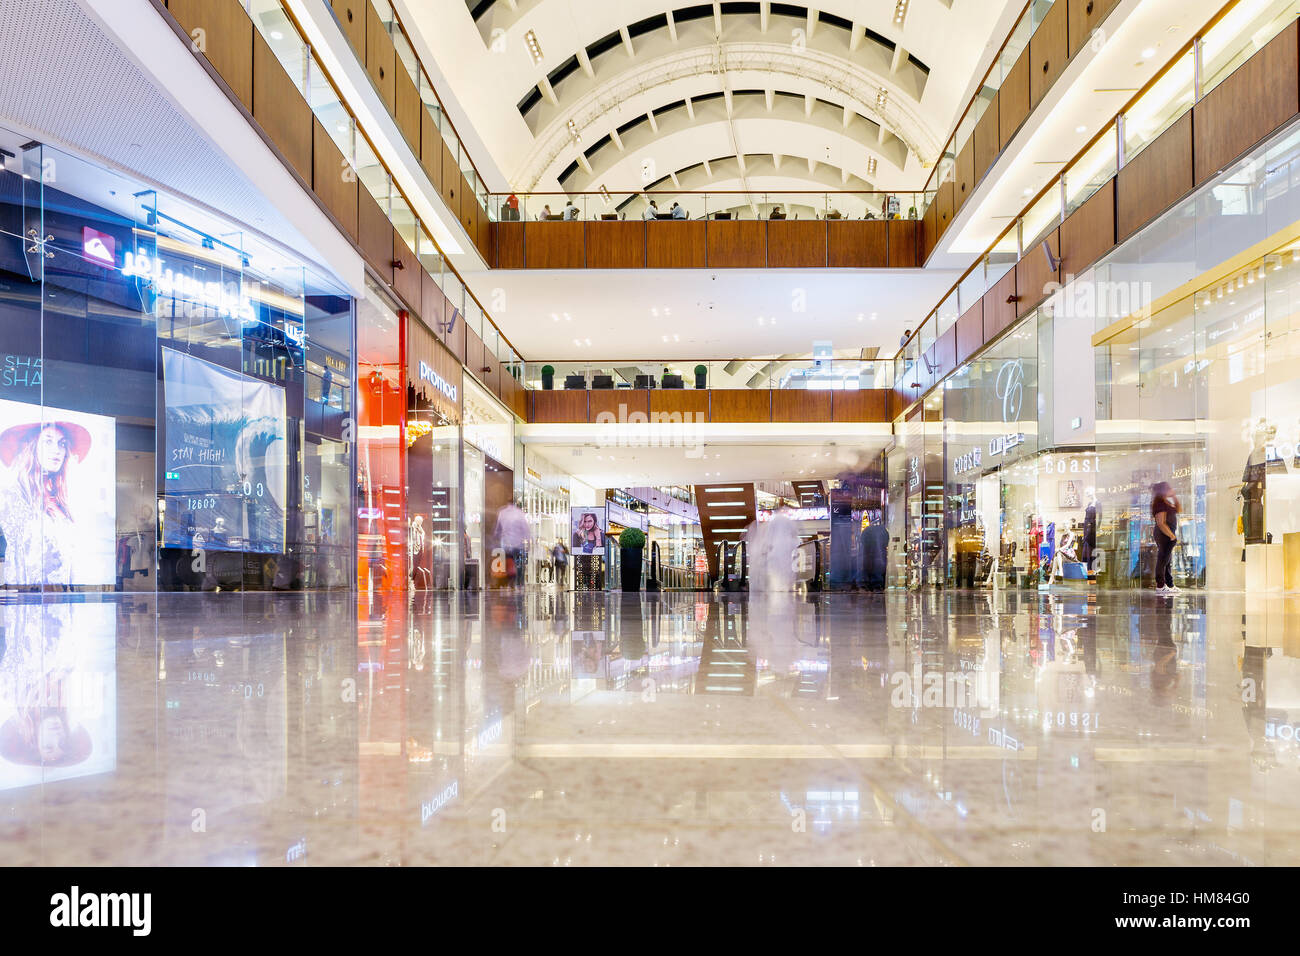 DUBAI - NOVEMBER 08, 2016: The Dubai Mall linterior. The Dubai Mall located in Dubai, it is part of the 20-billion-dollar Downtown Dubai complex, and  Stock Photo